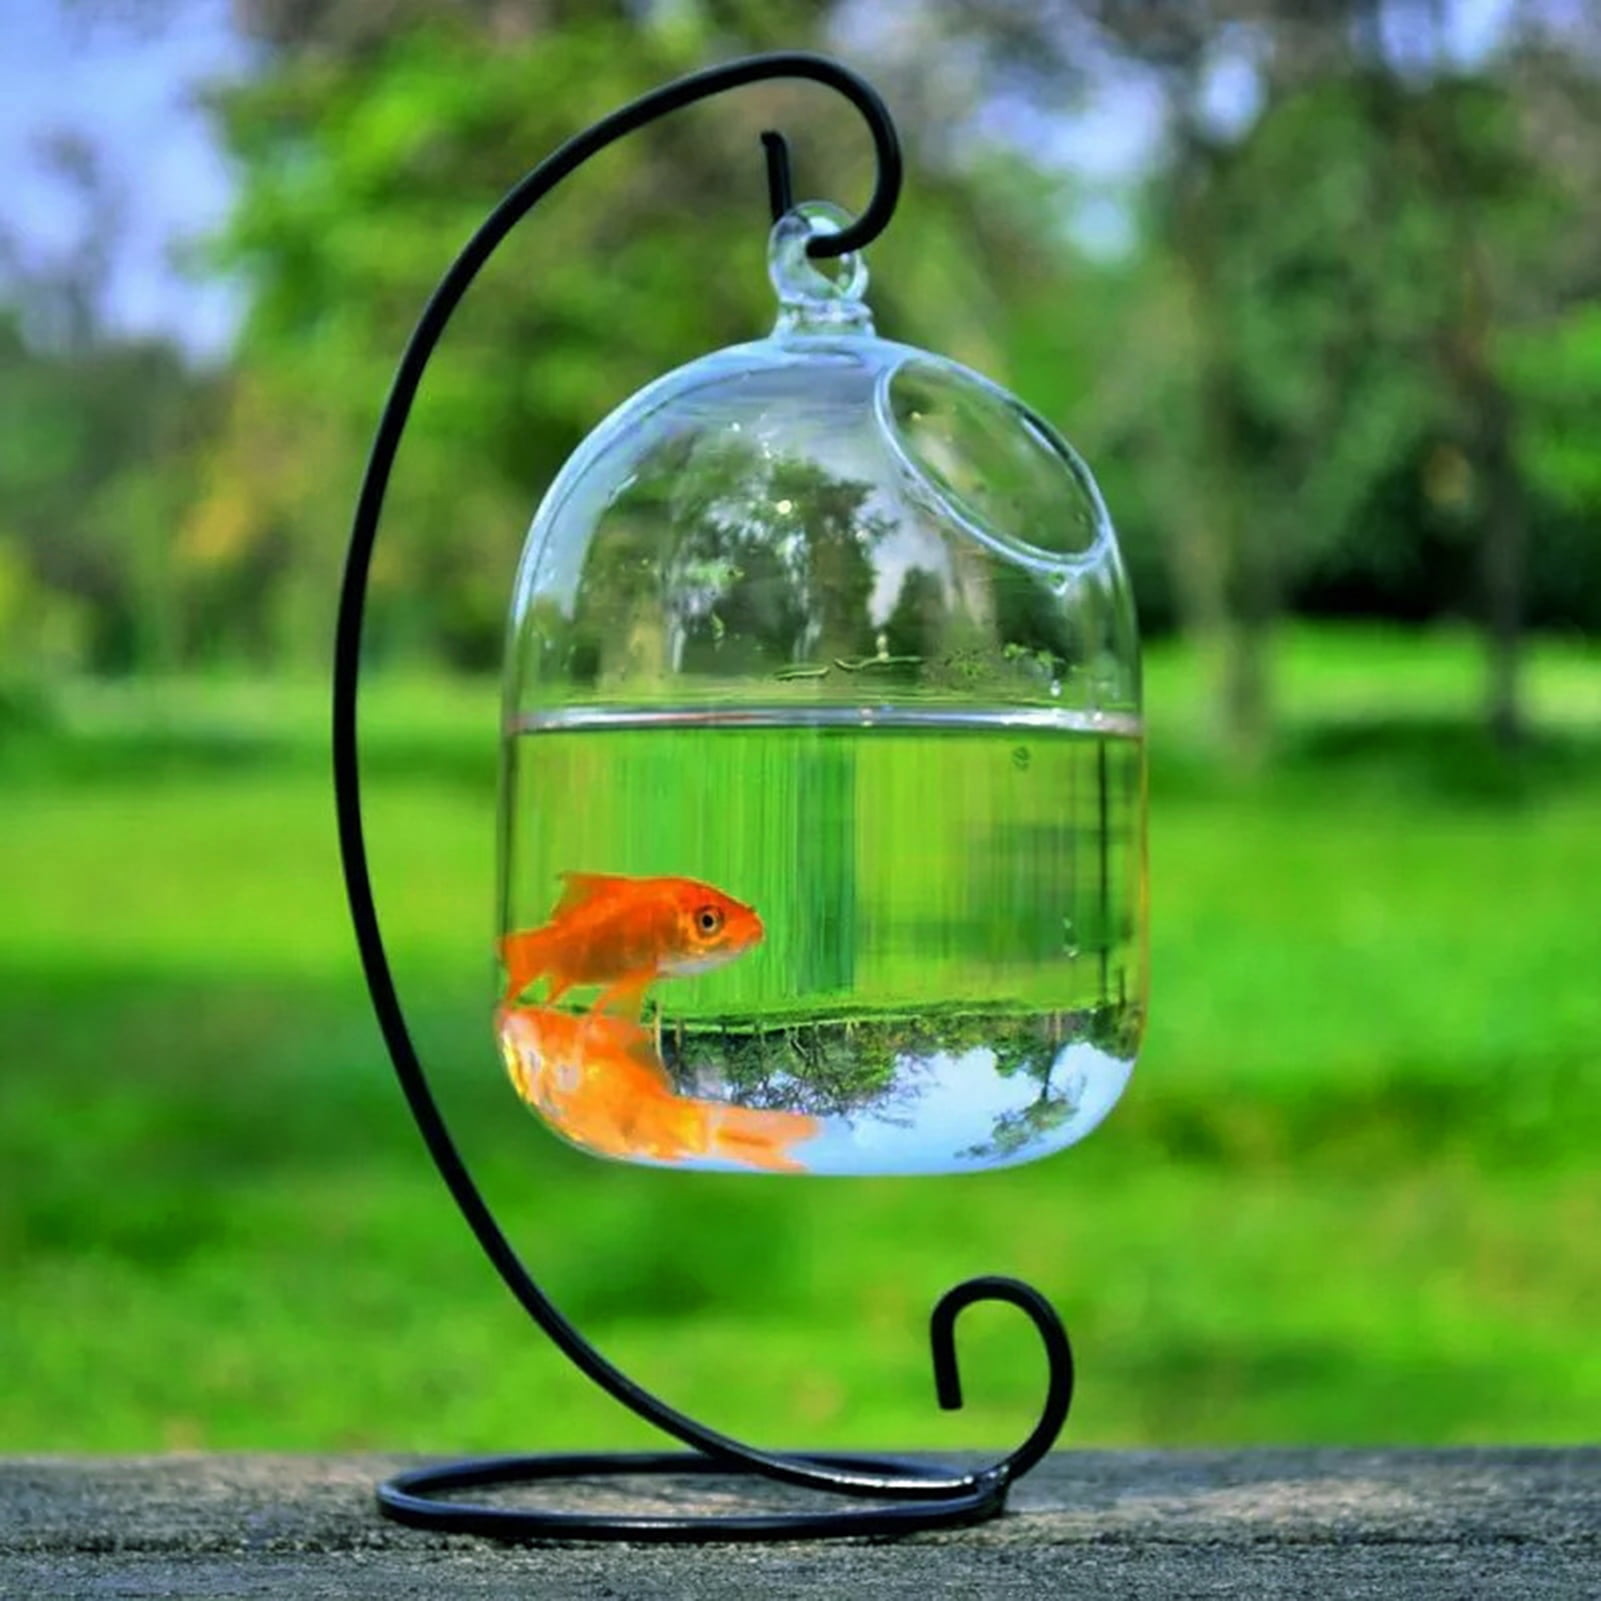 Yirtree Desk Hanging Fish Tank, Small Glass Betta Bowl Aquarium